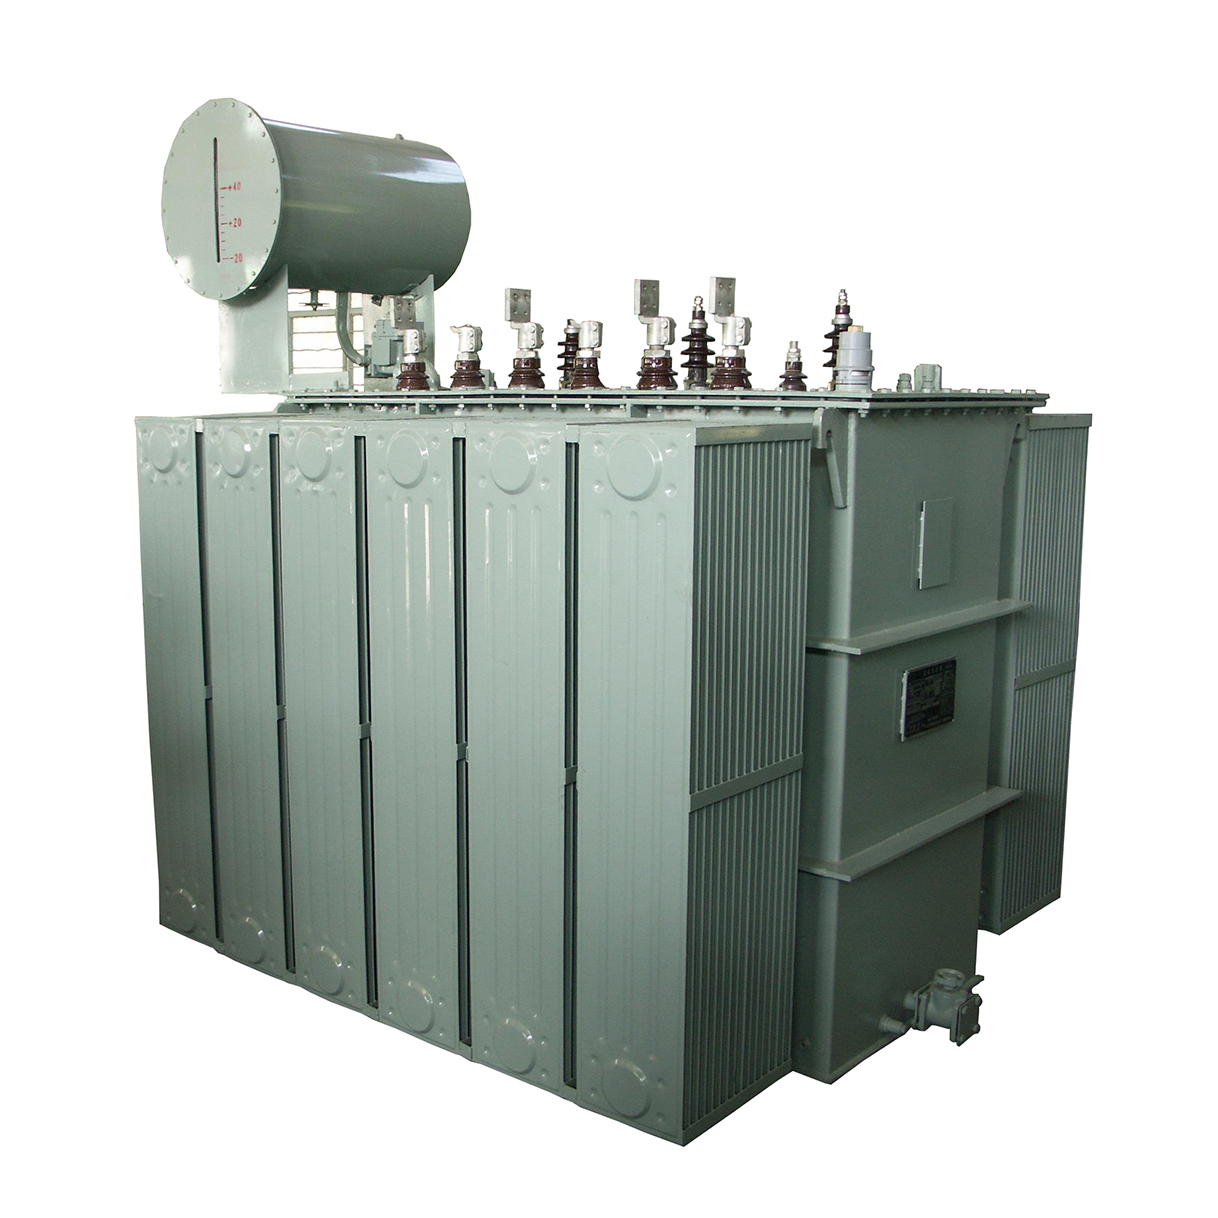 HS series electric furnace transformer